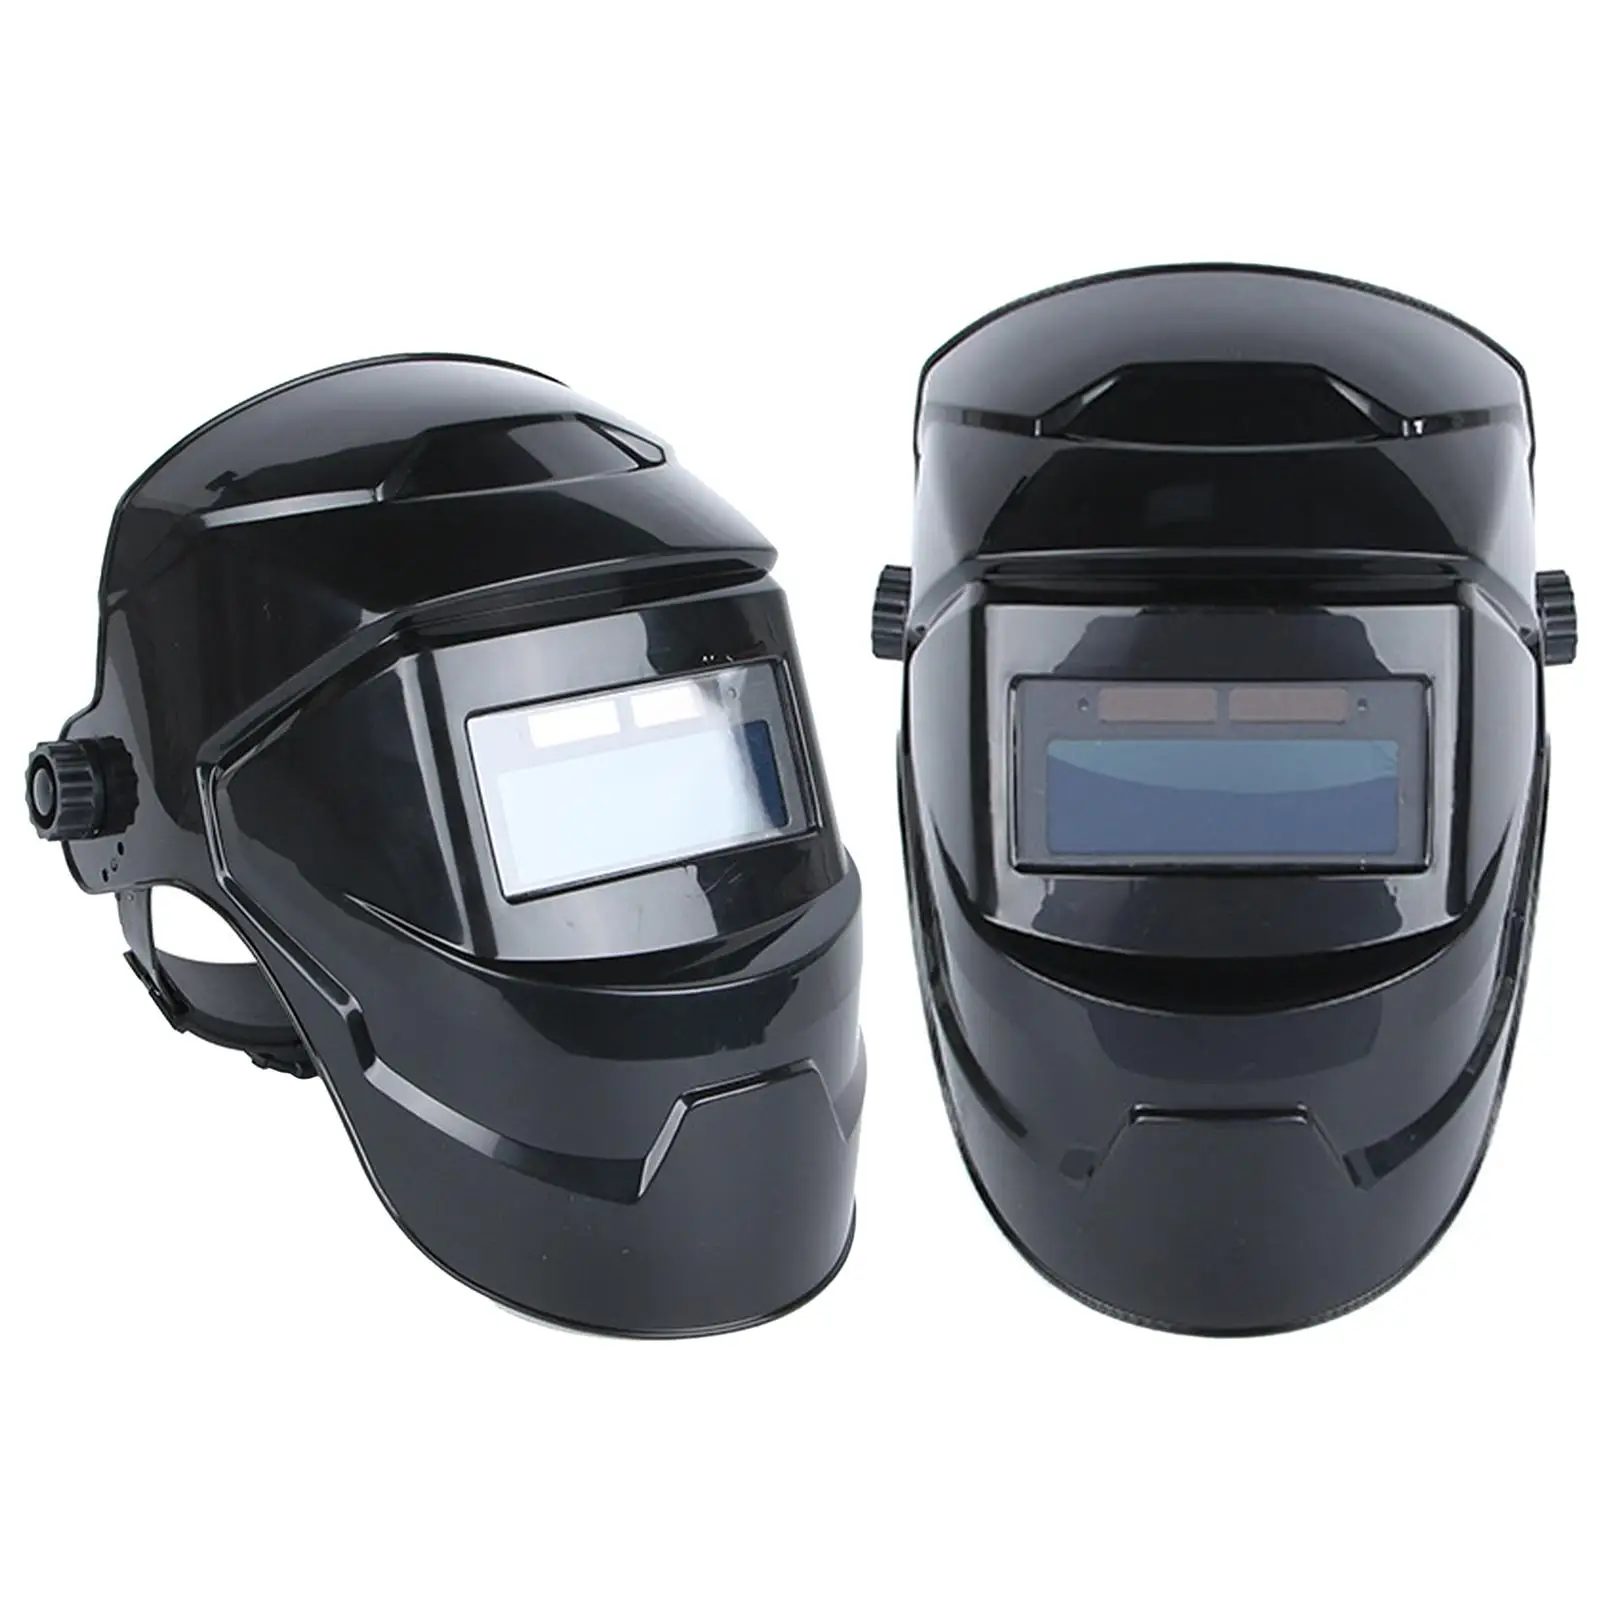 Large View Auto Darkening Welding Helmet Lightweight 180 Free Rotation Welding Hood Welding Helmet Welder Mask for TIG Mig ARC